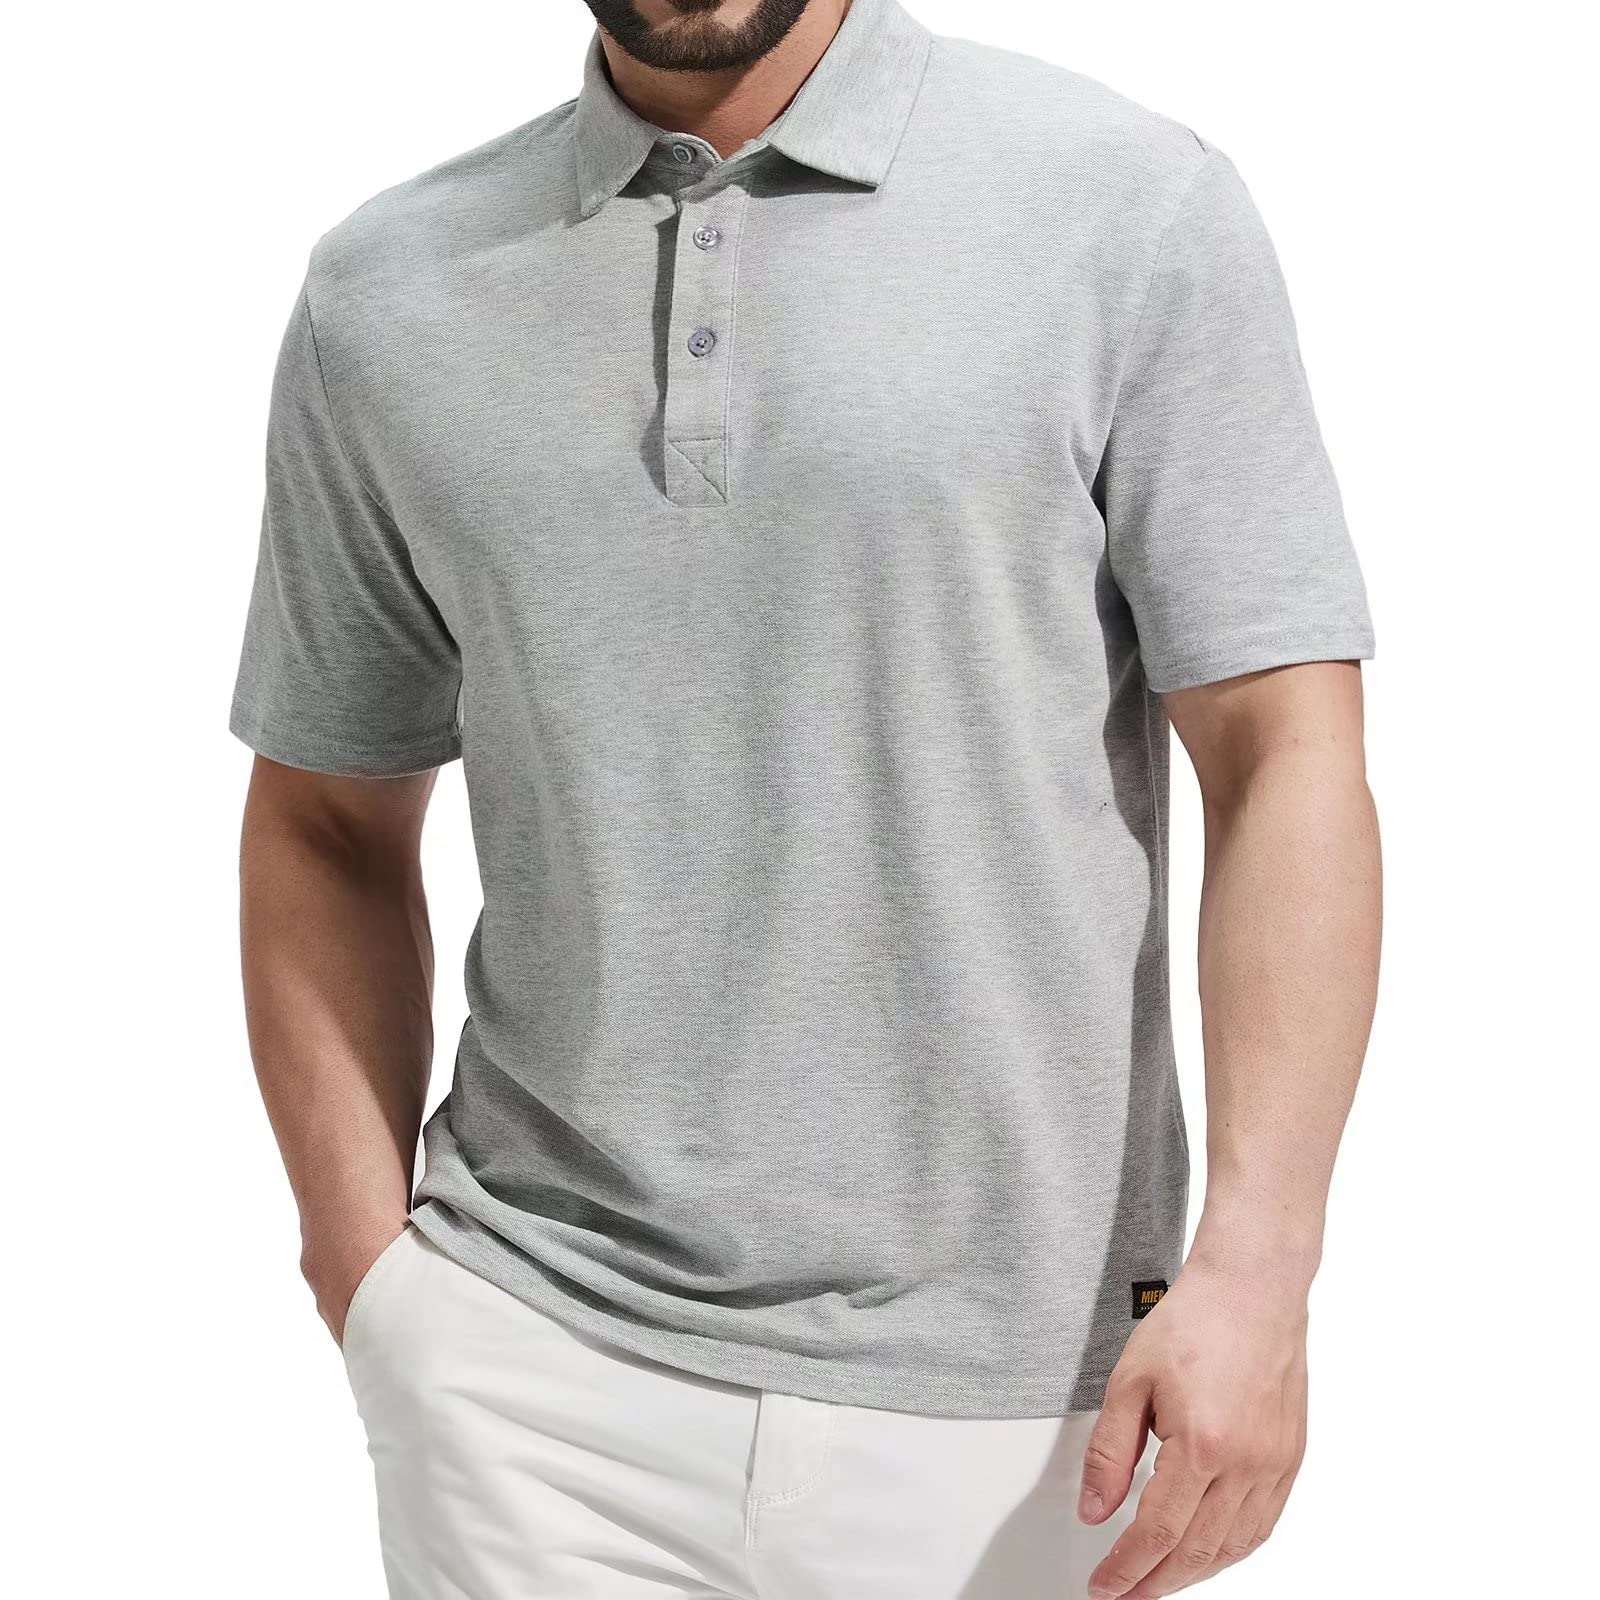 Men's Short Sleeve Cotton Polo Shirts Soft Golf Shirt - Heather Grey / XS